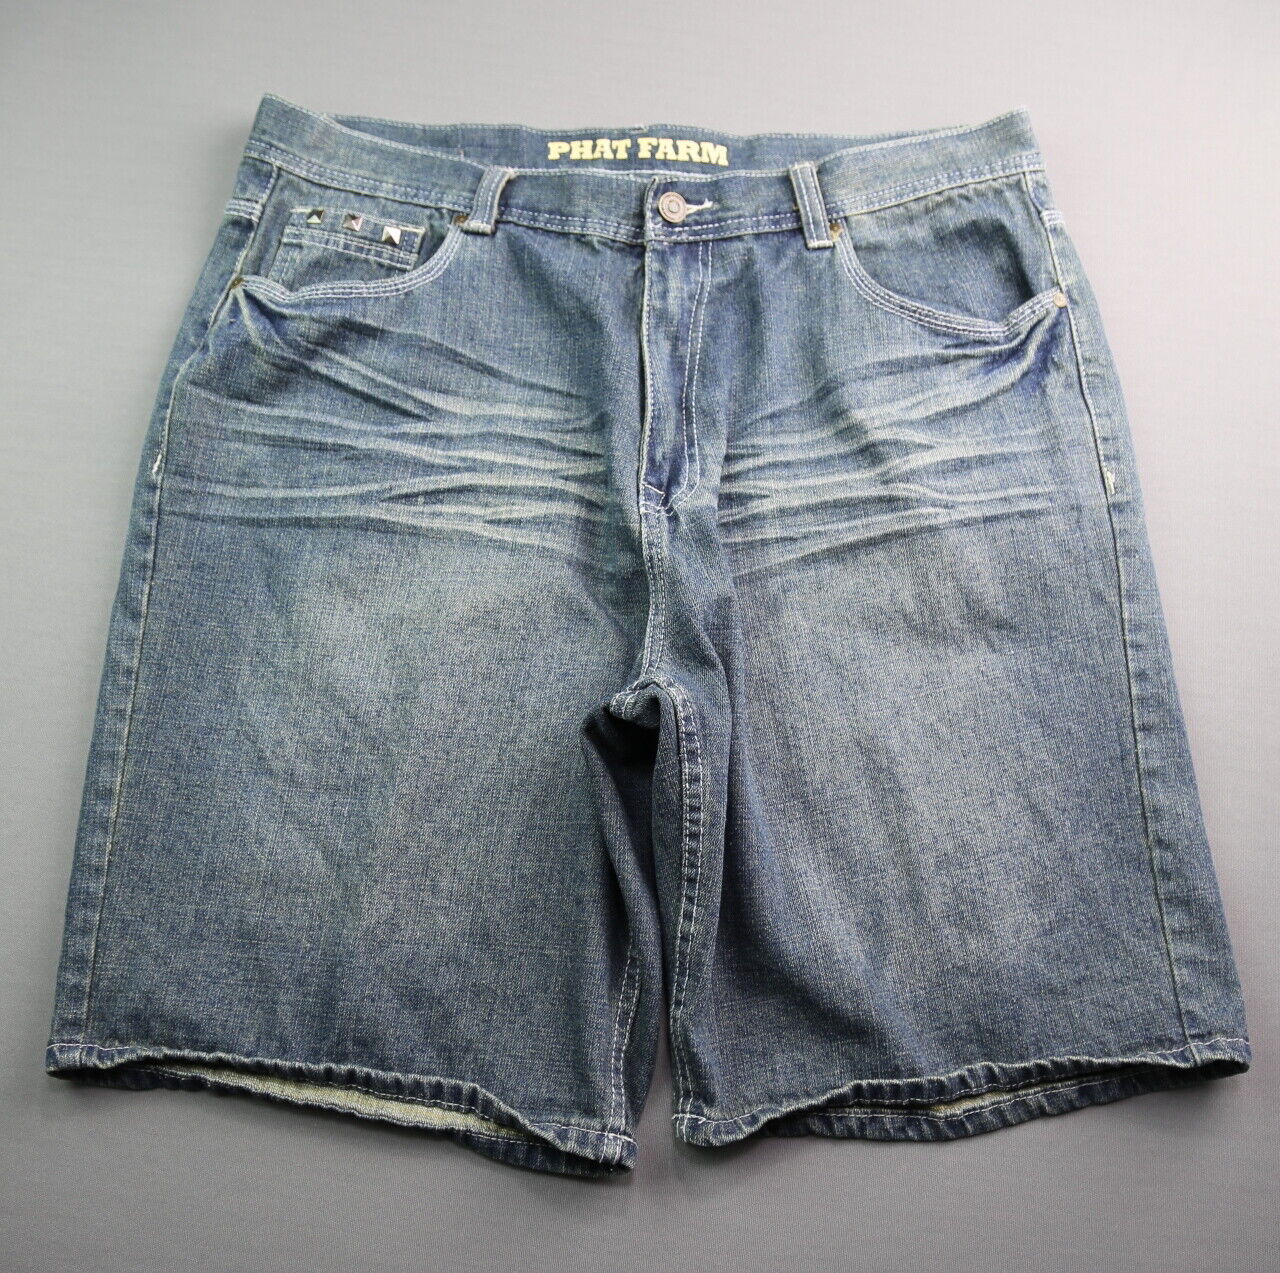 Best of Phat farm jean shorts